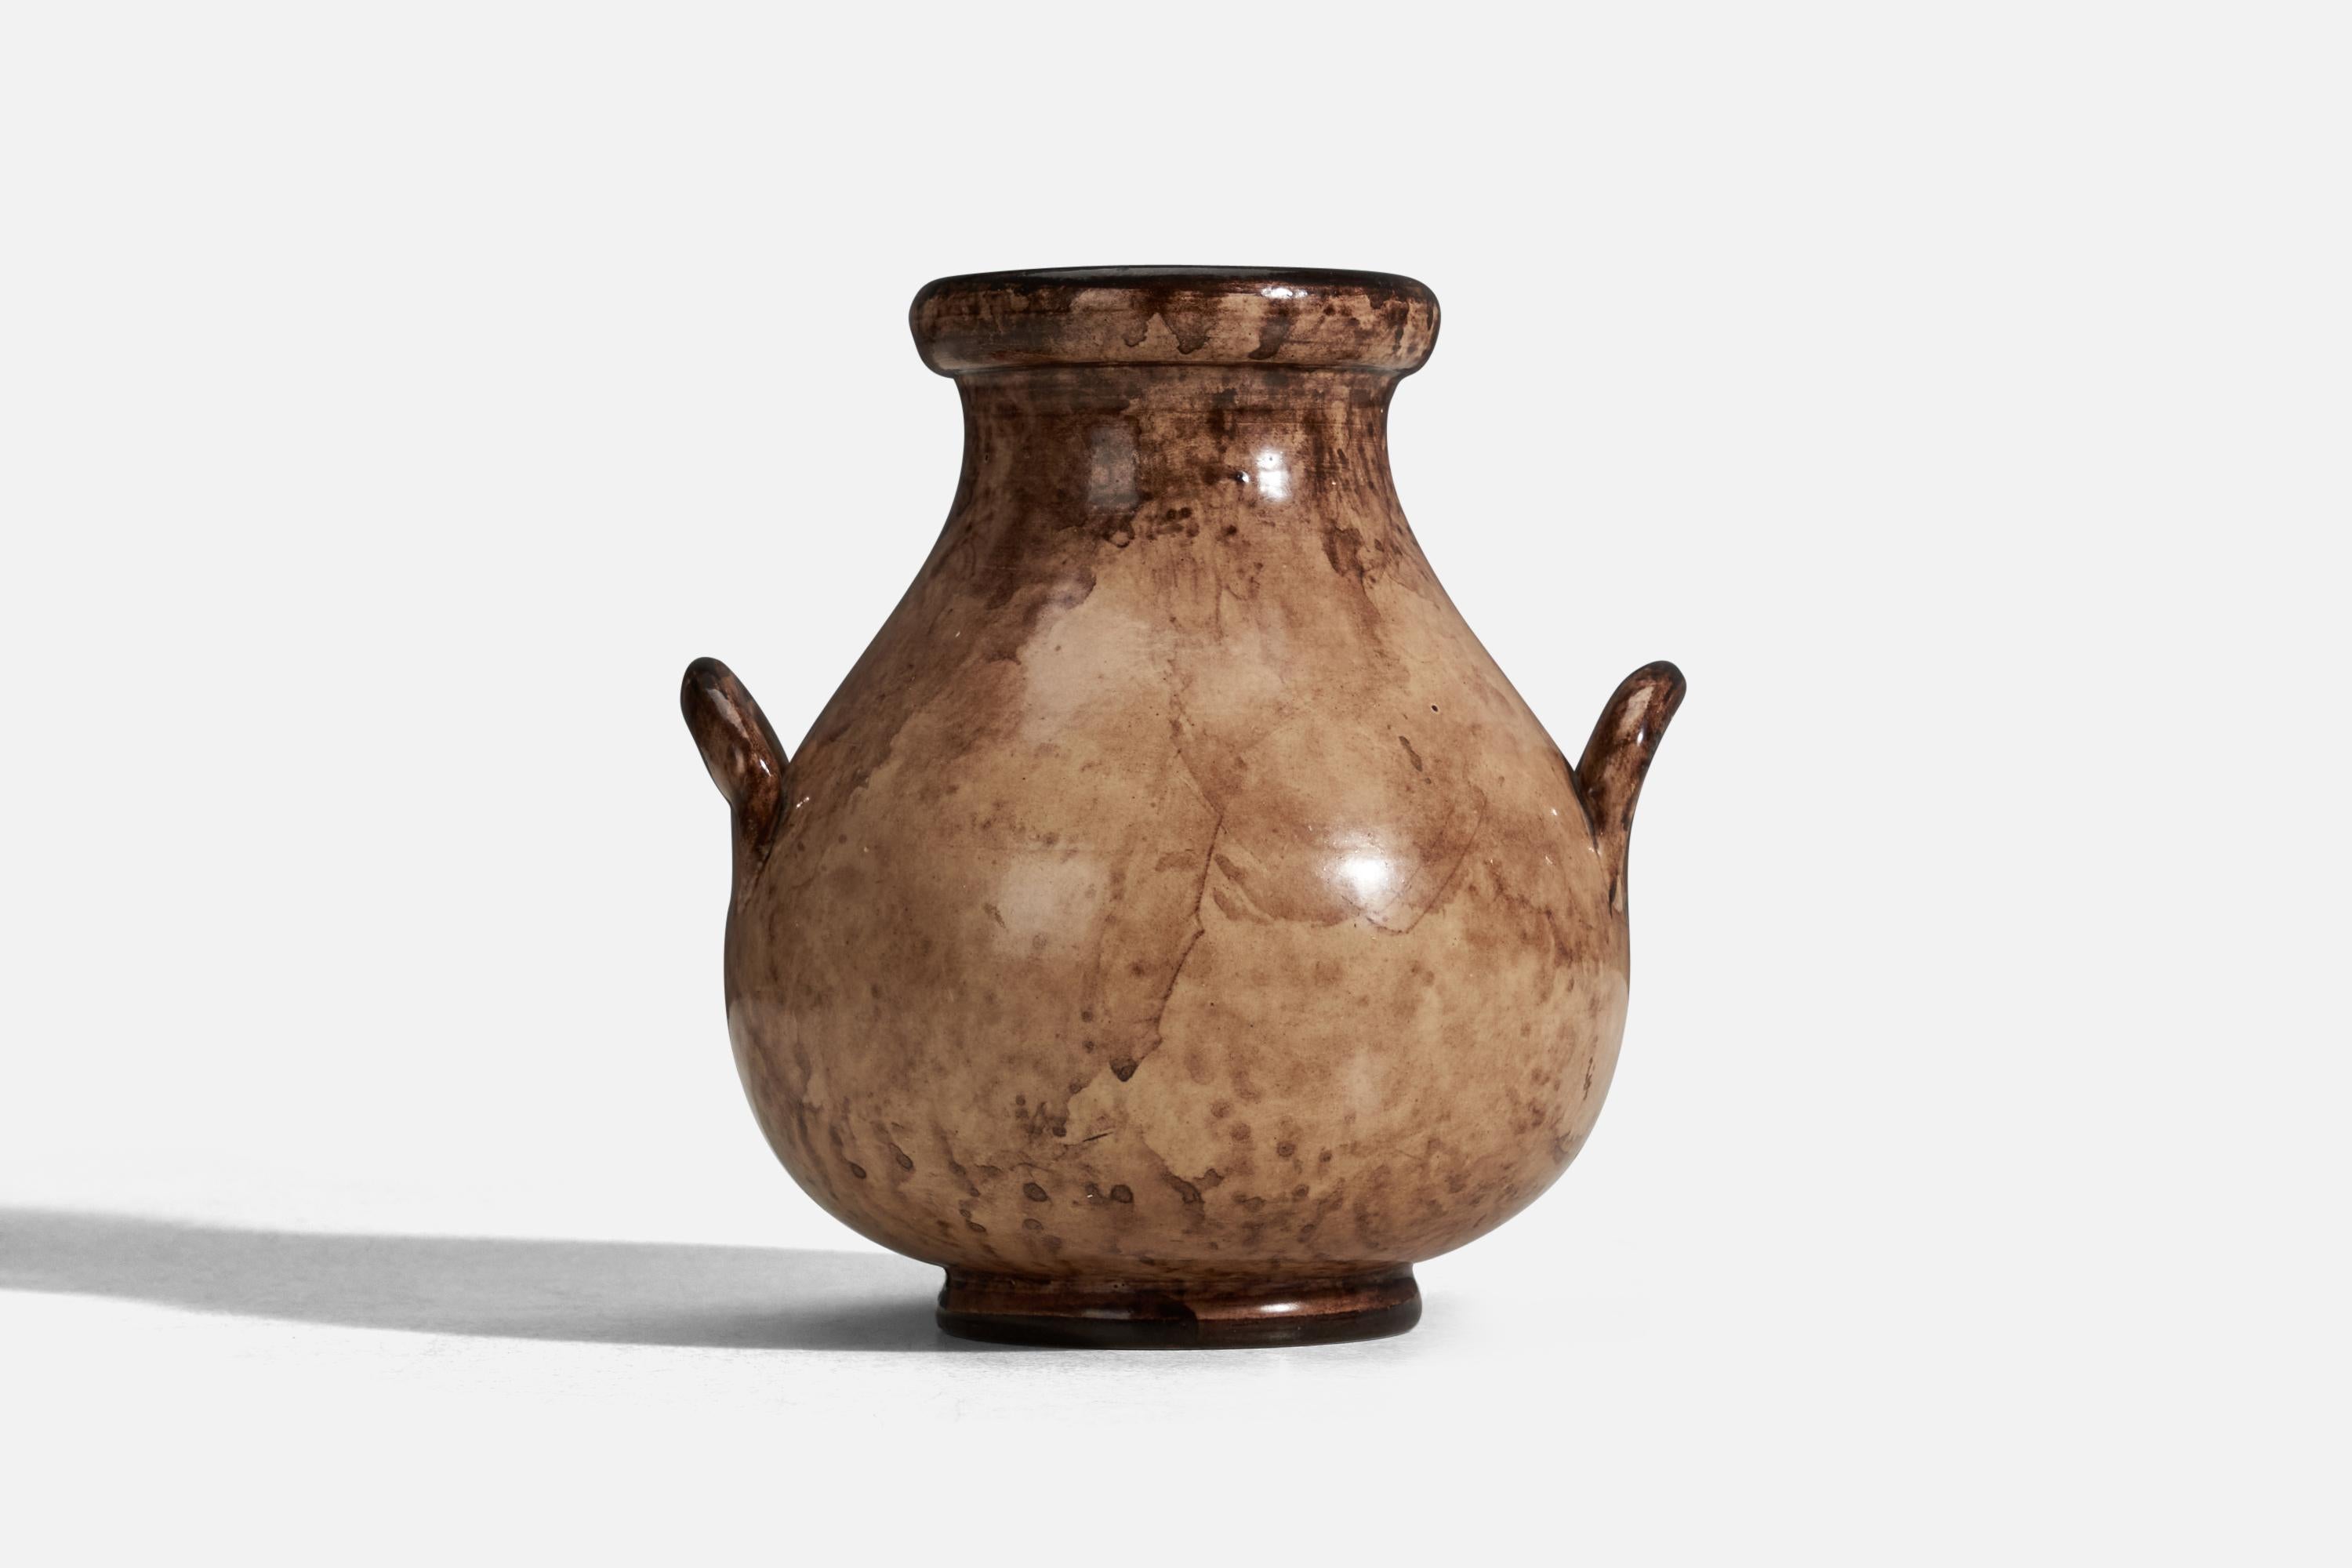 A brown glazed earthenware vase designed by Erik Mornils and produced by Nittsjö, Sweden, 1930s.